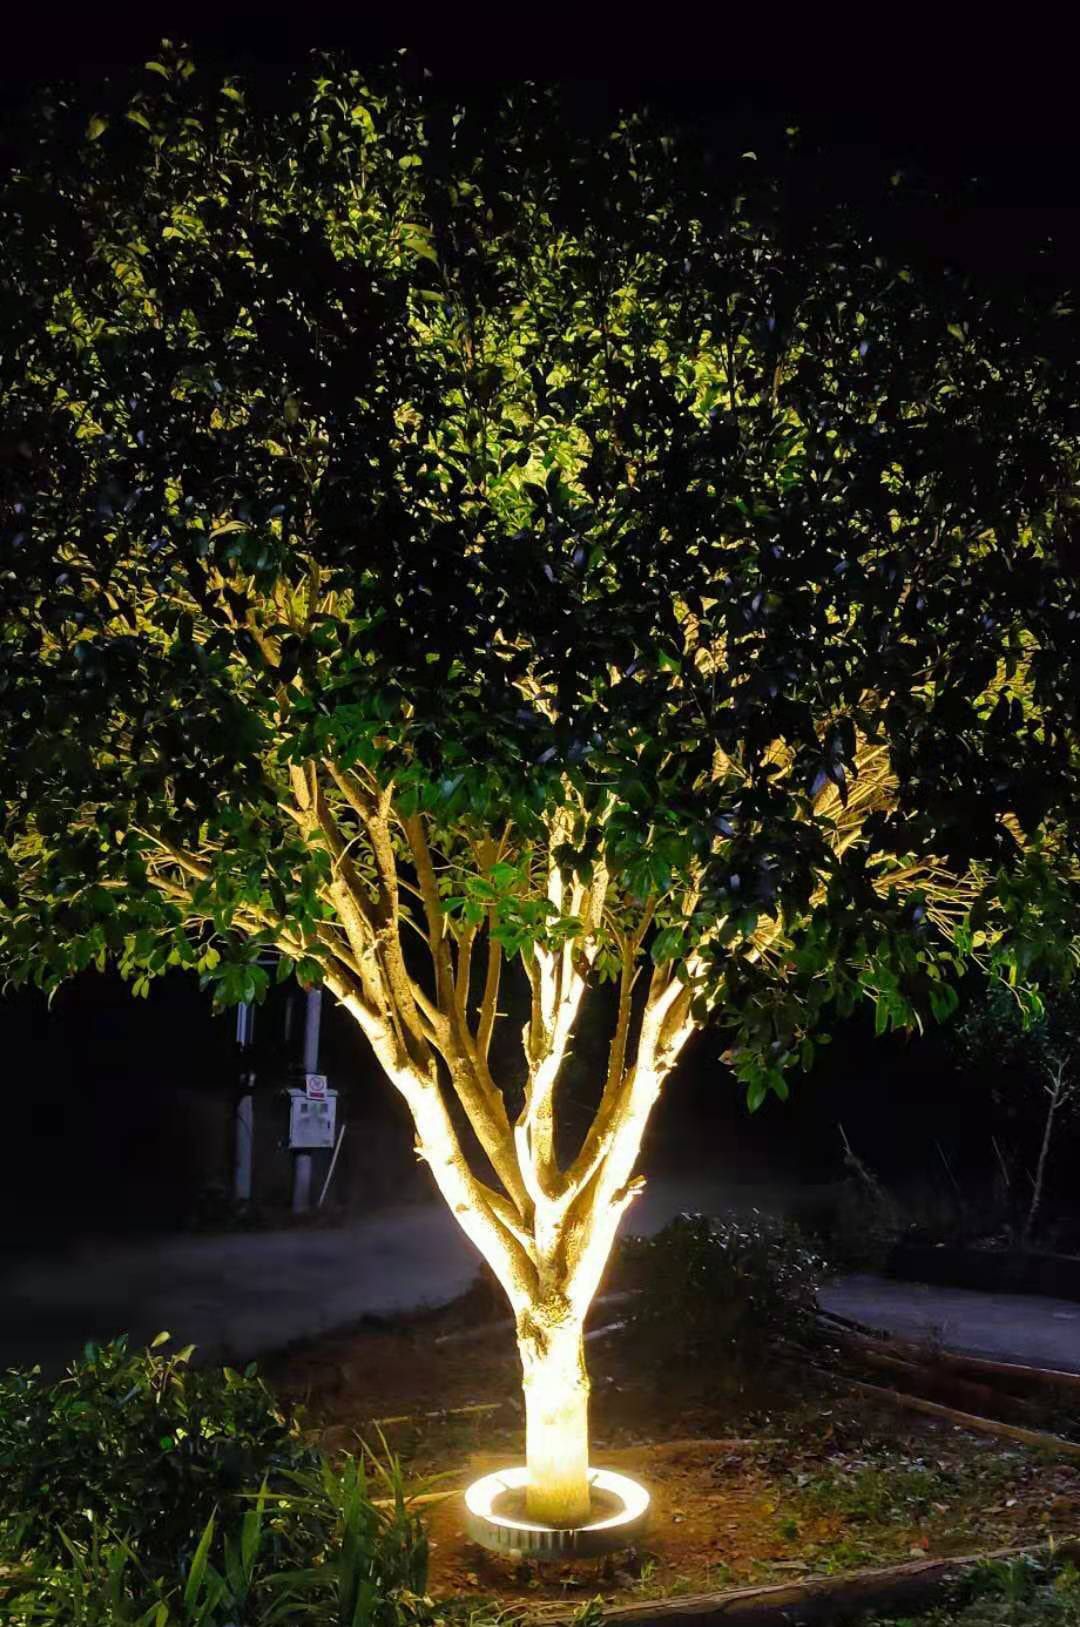 Outdoor Lighting For Garden : Illuminate Your Garden with Stunning Outdoor Lighting Options